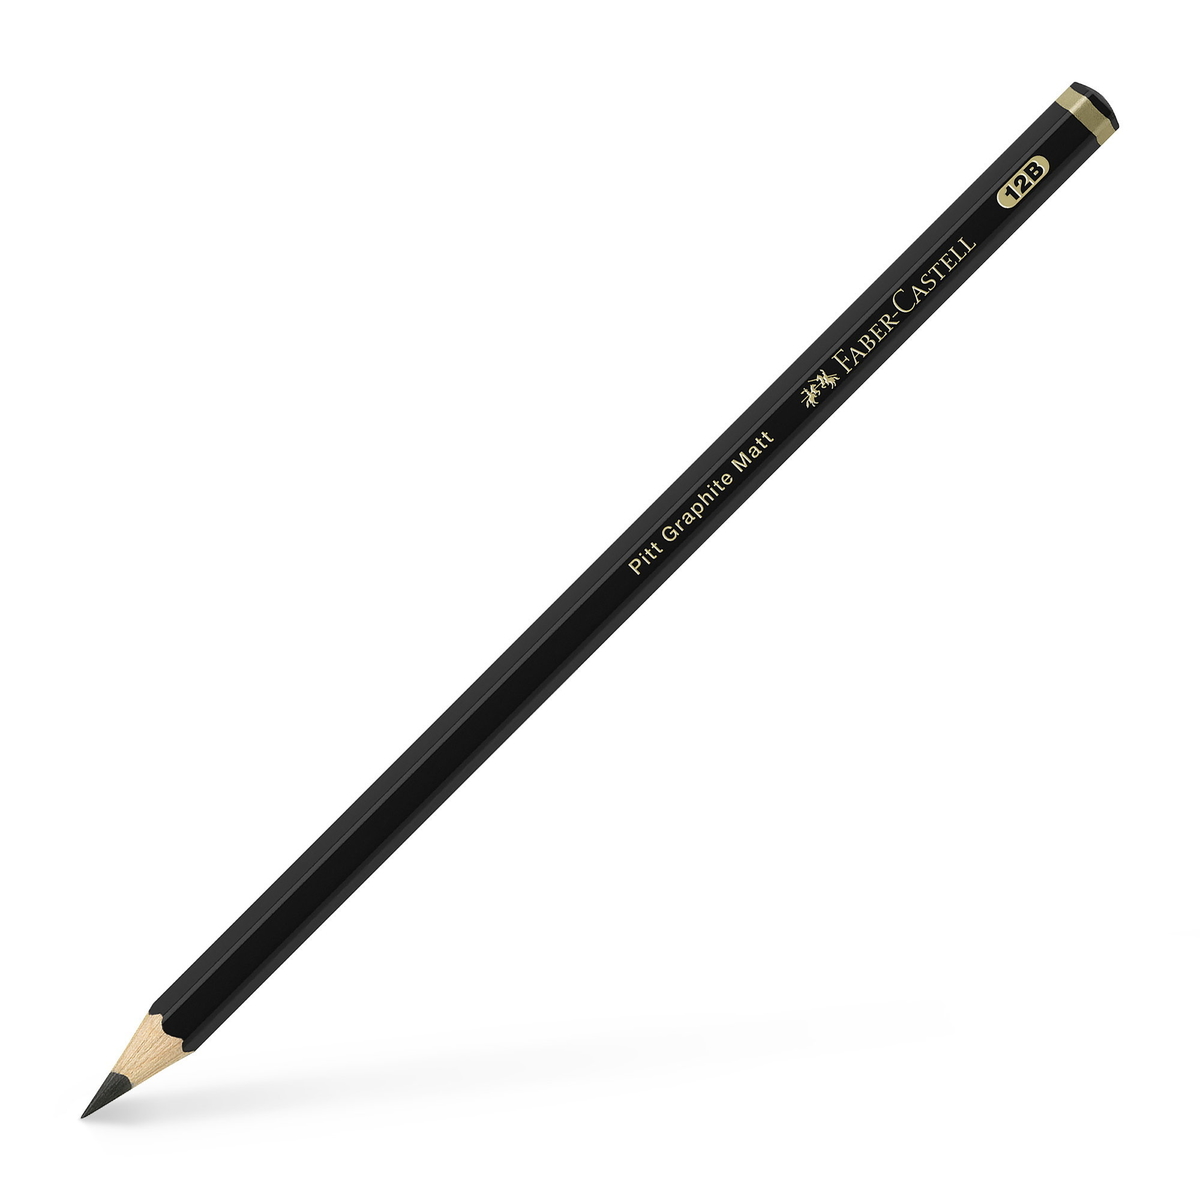 Graphite Matt Pencil Set of 6 in the group Art Supplies / Crayons & Graphite / Graphite & Pencils at Pen Store (127914)